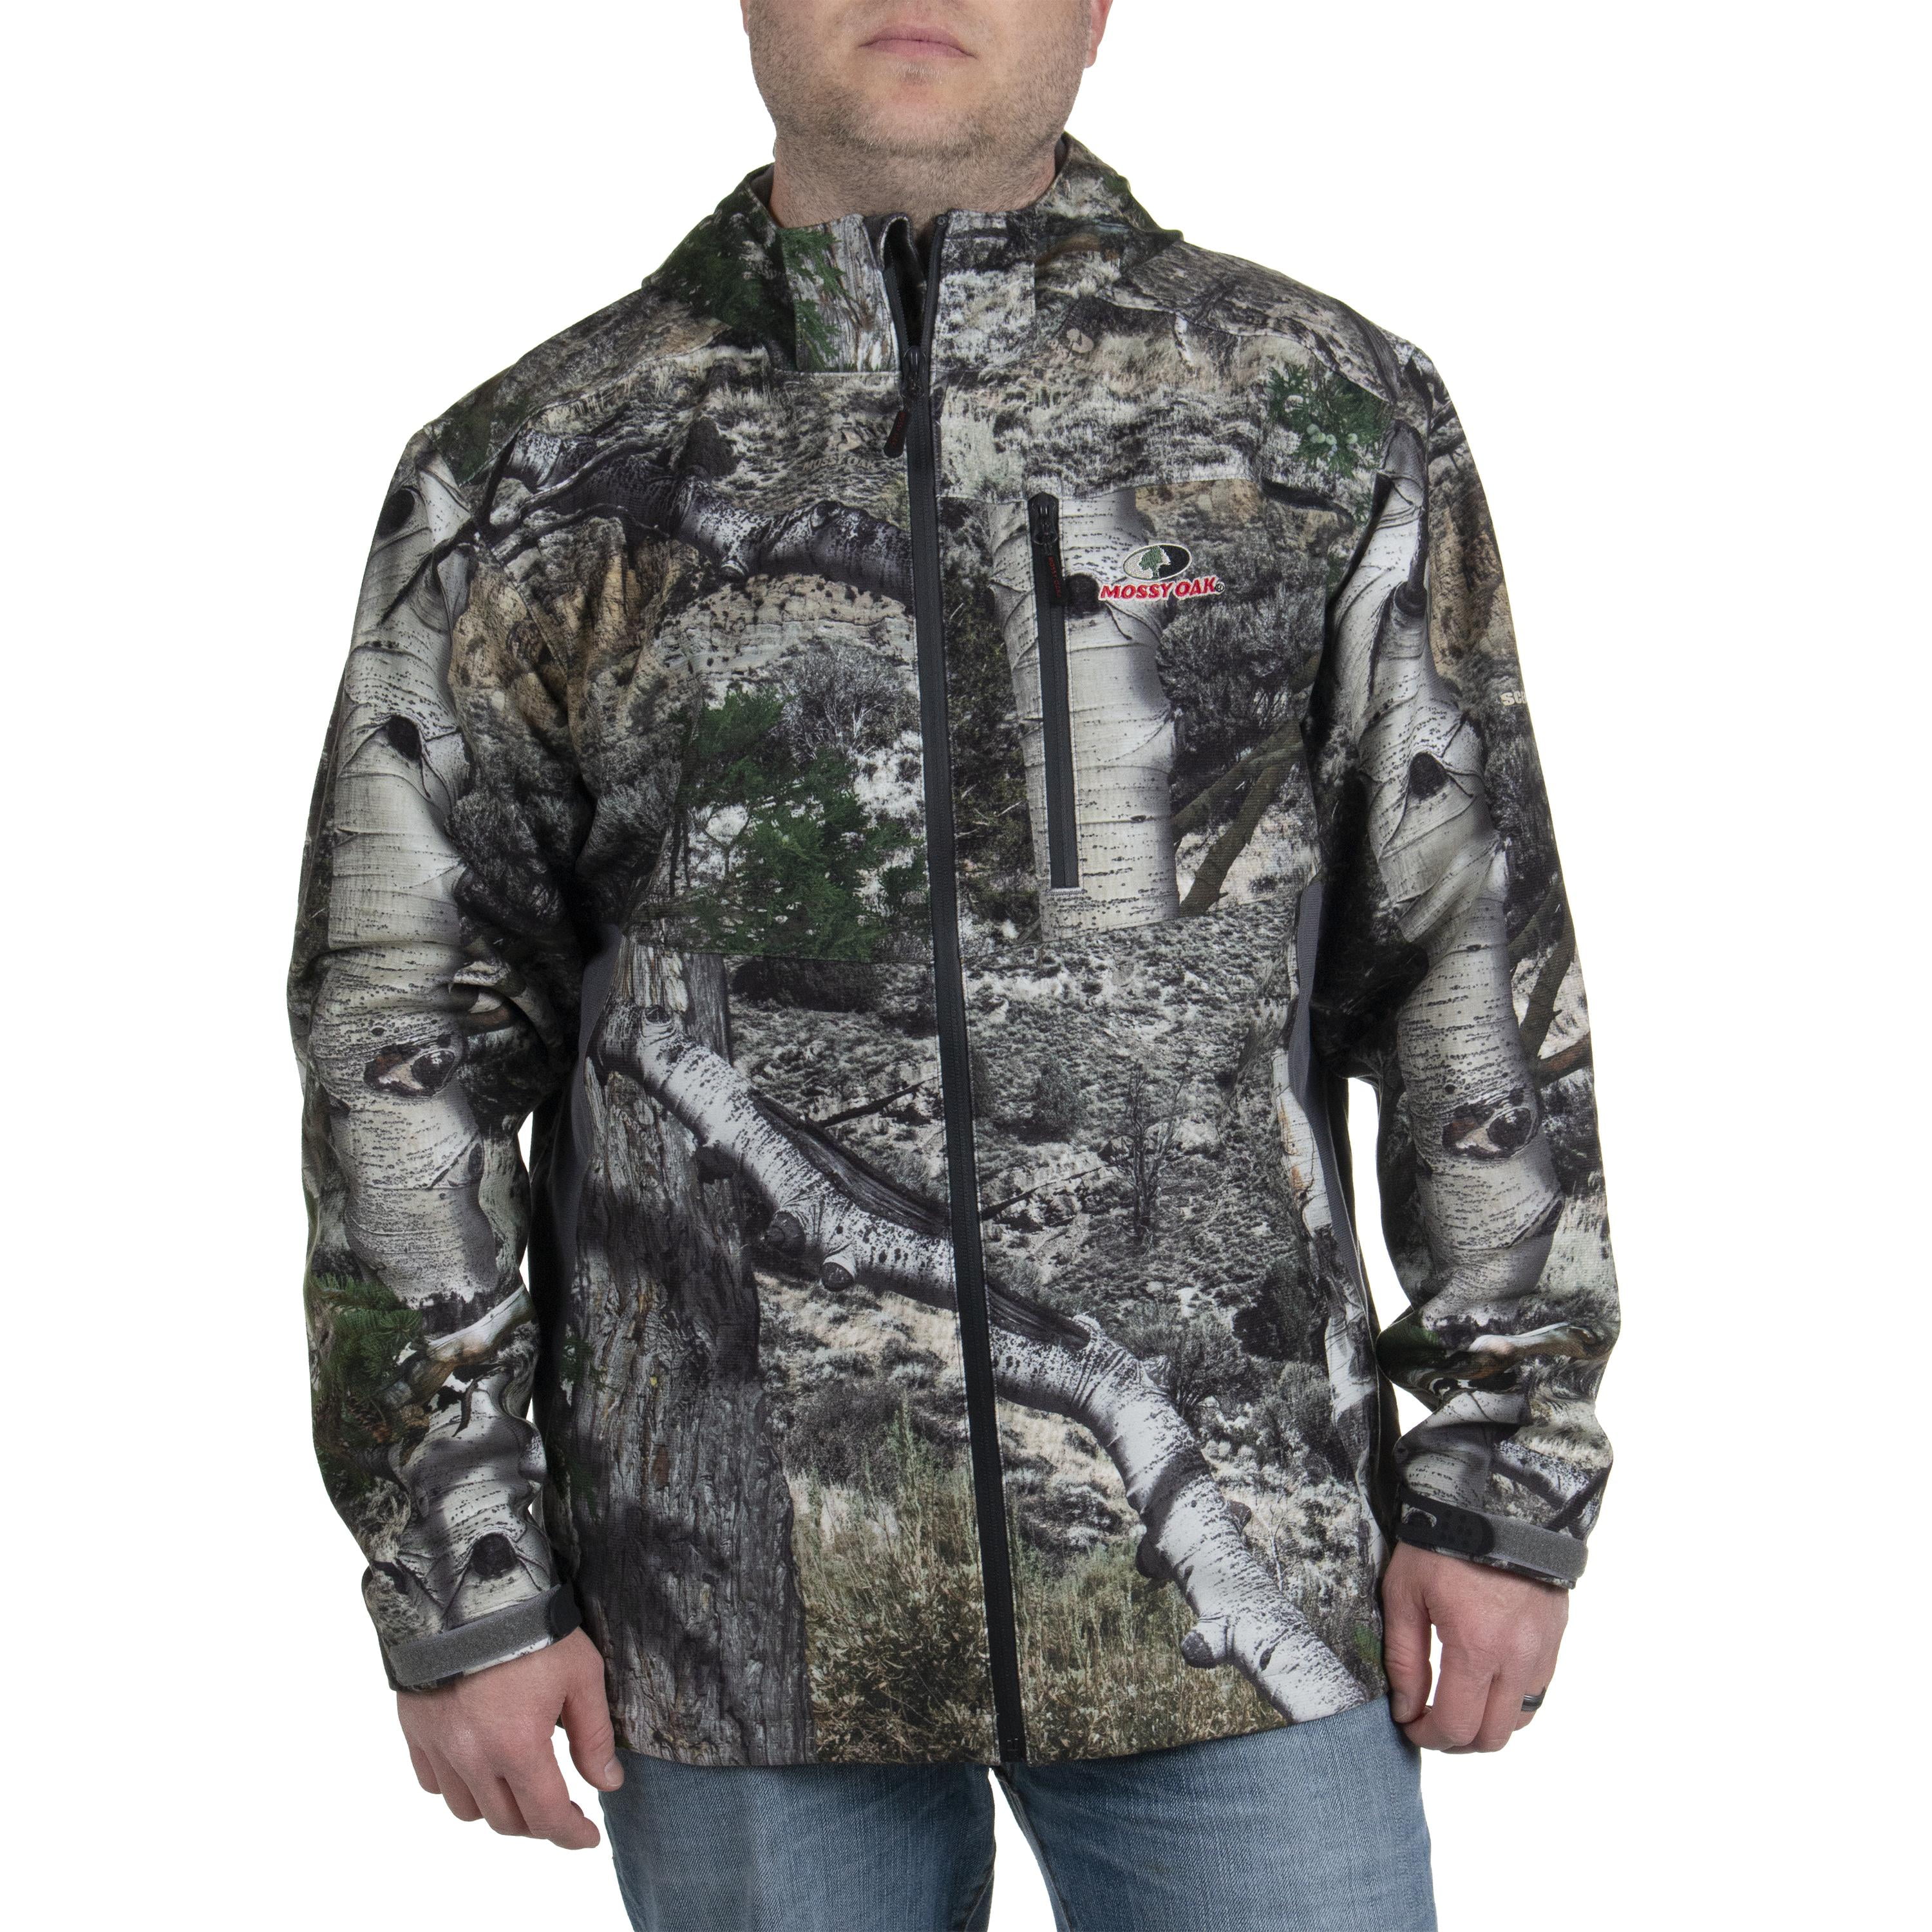 NWT Mossy Oak Camo Camouflage Activewear Jacket Black & Pink 